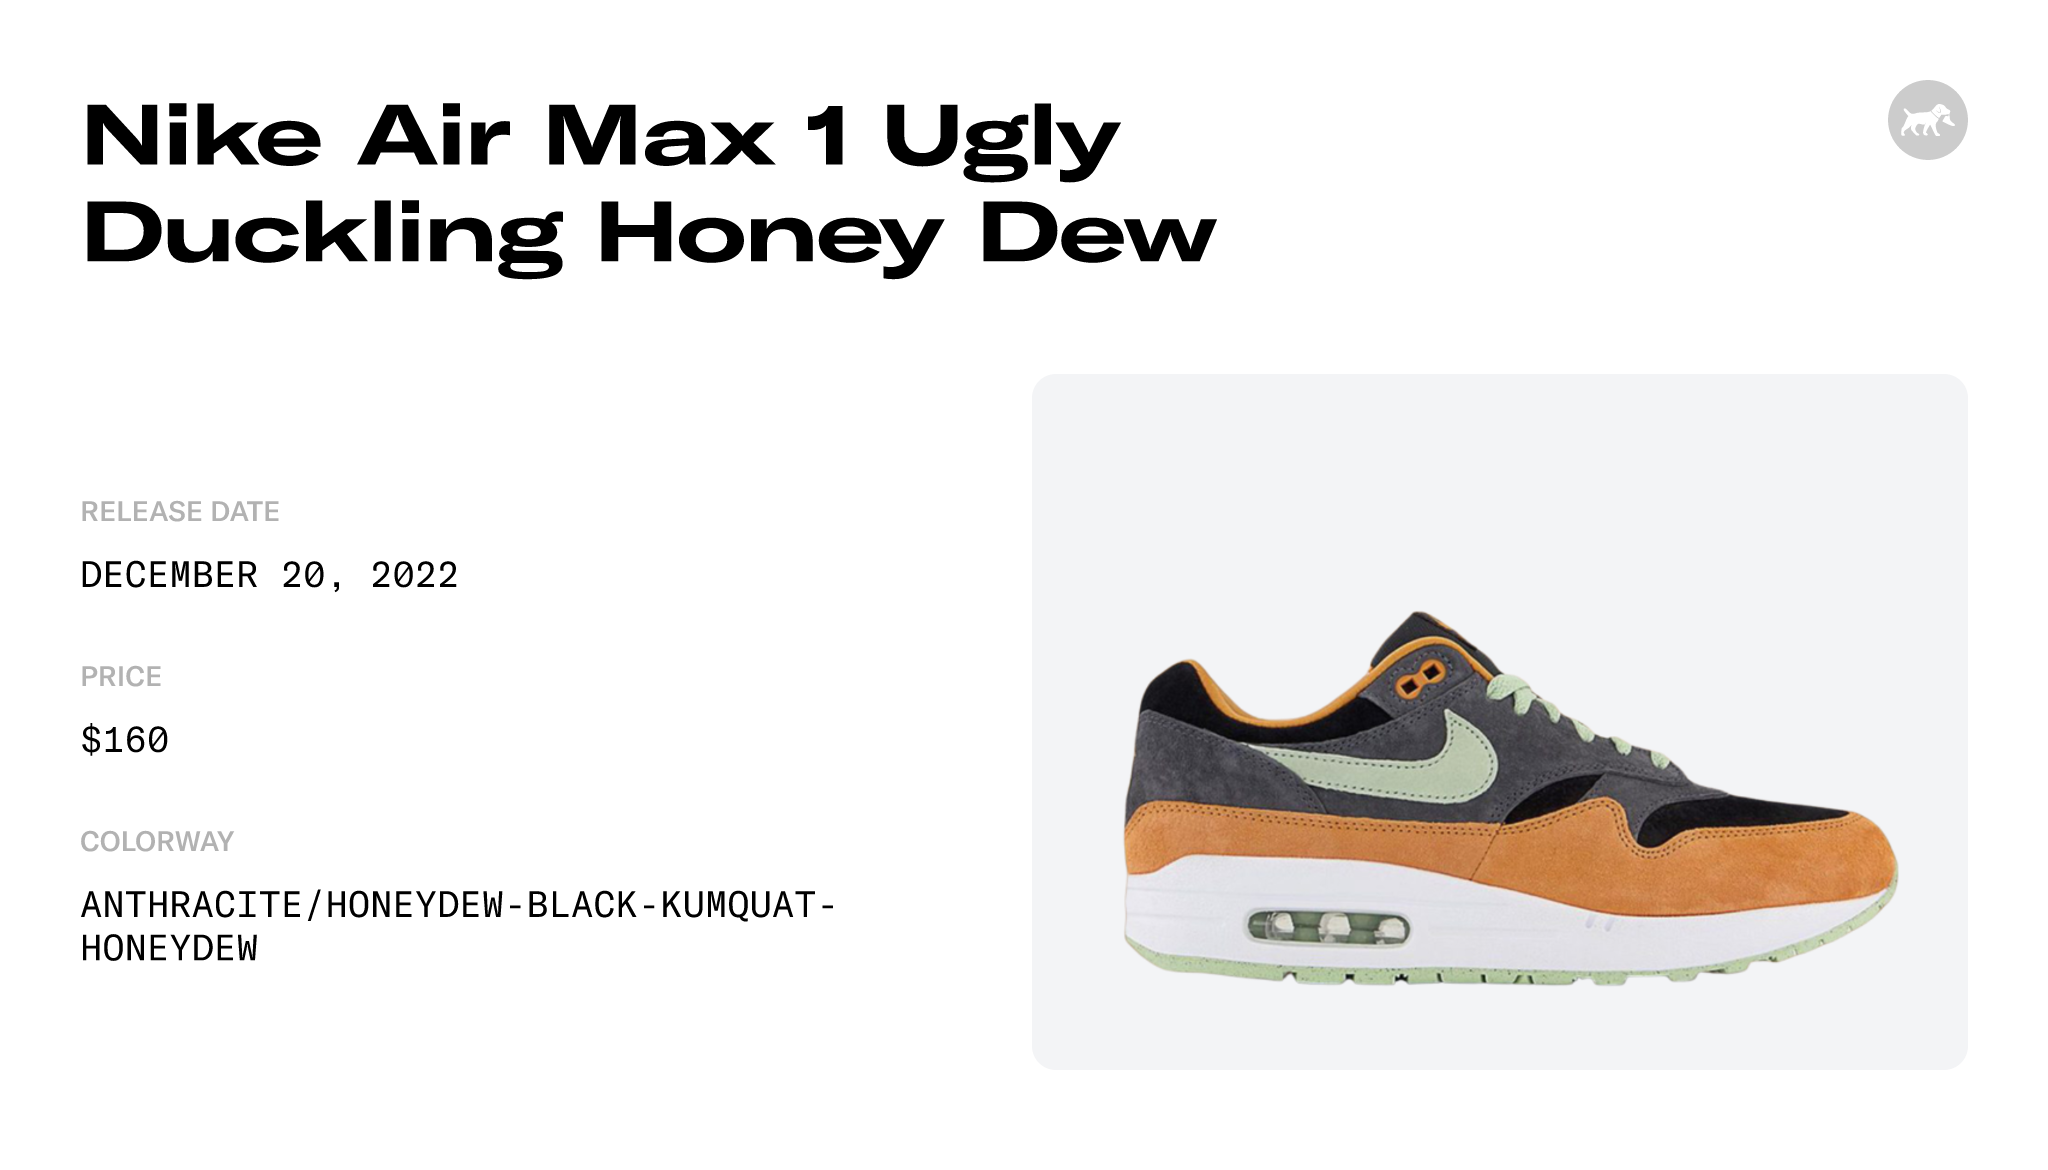 Nike Air Max 1 Honey Dew Ugly Duckling